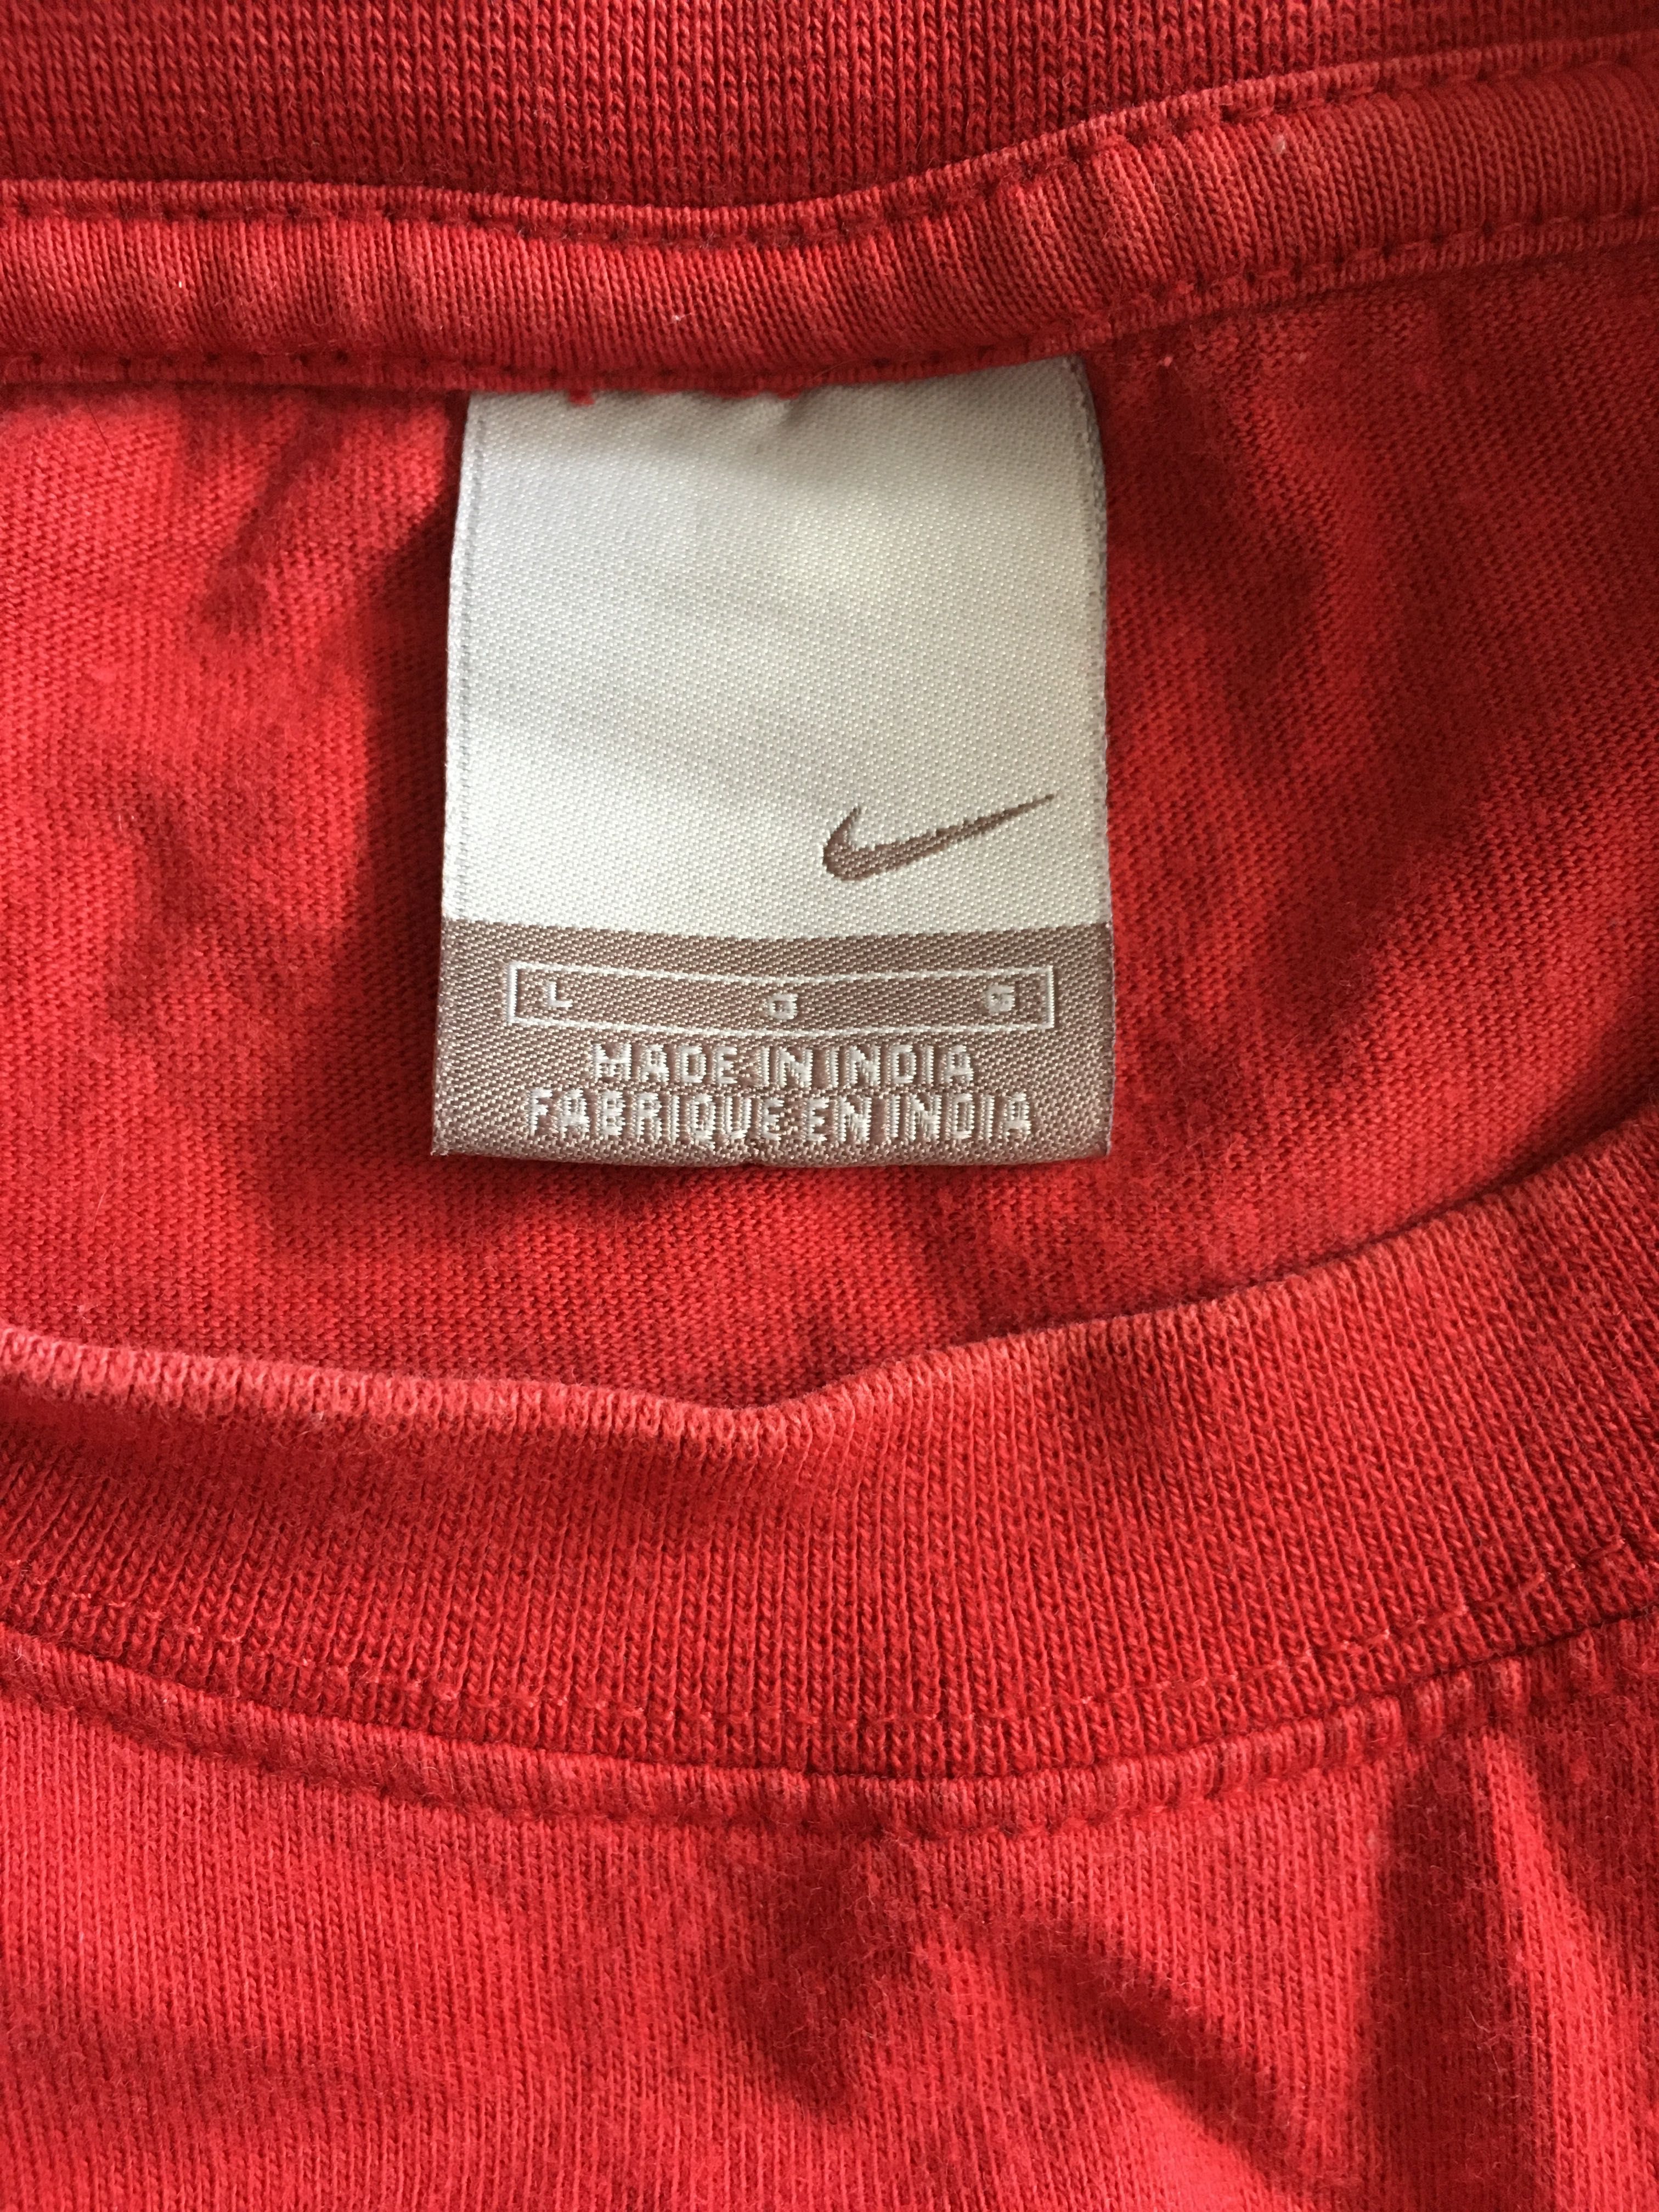 T-shirt Nike Air